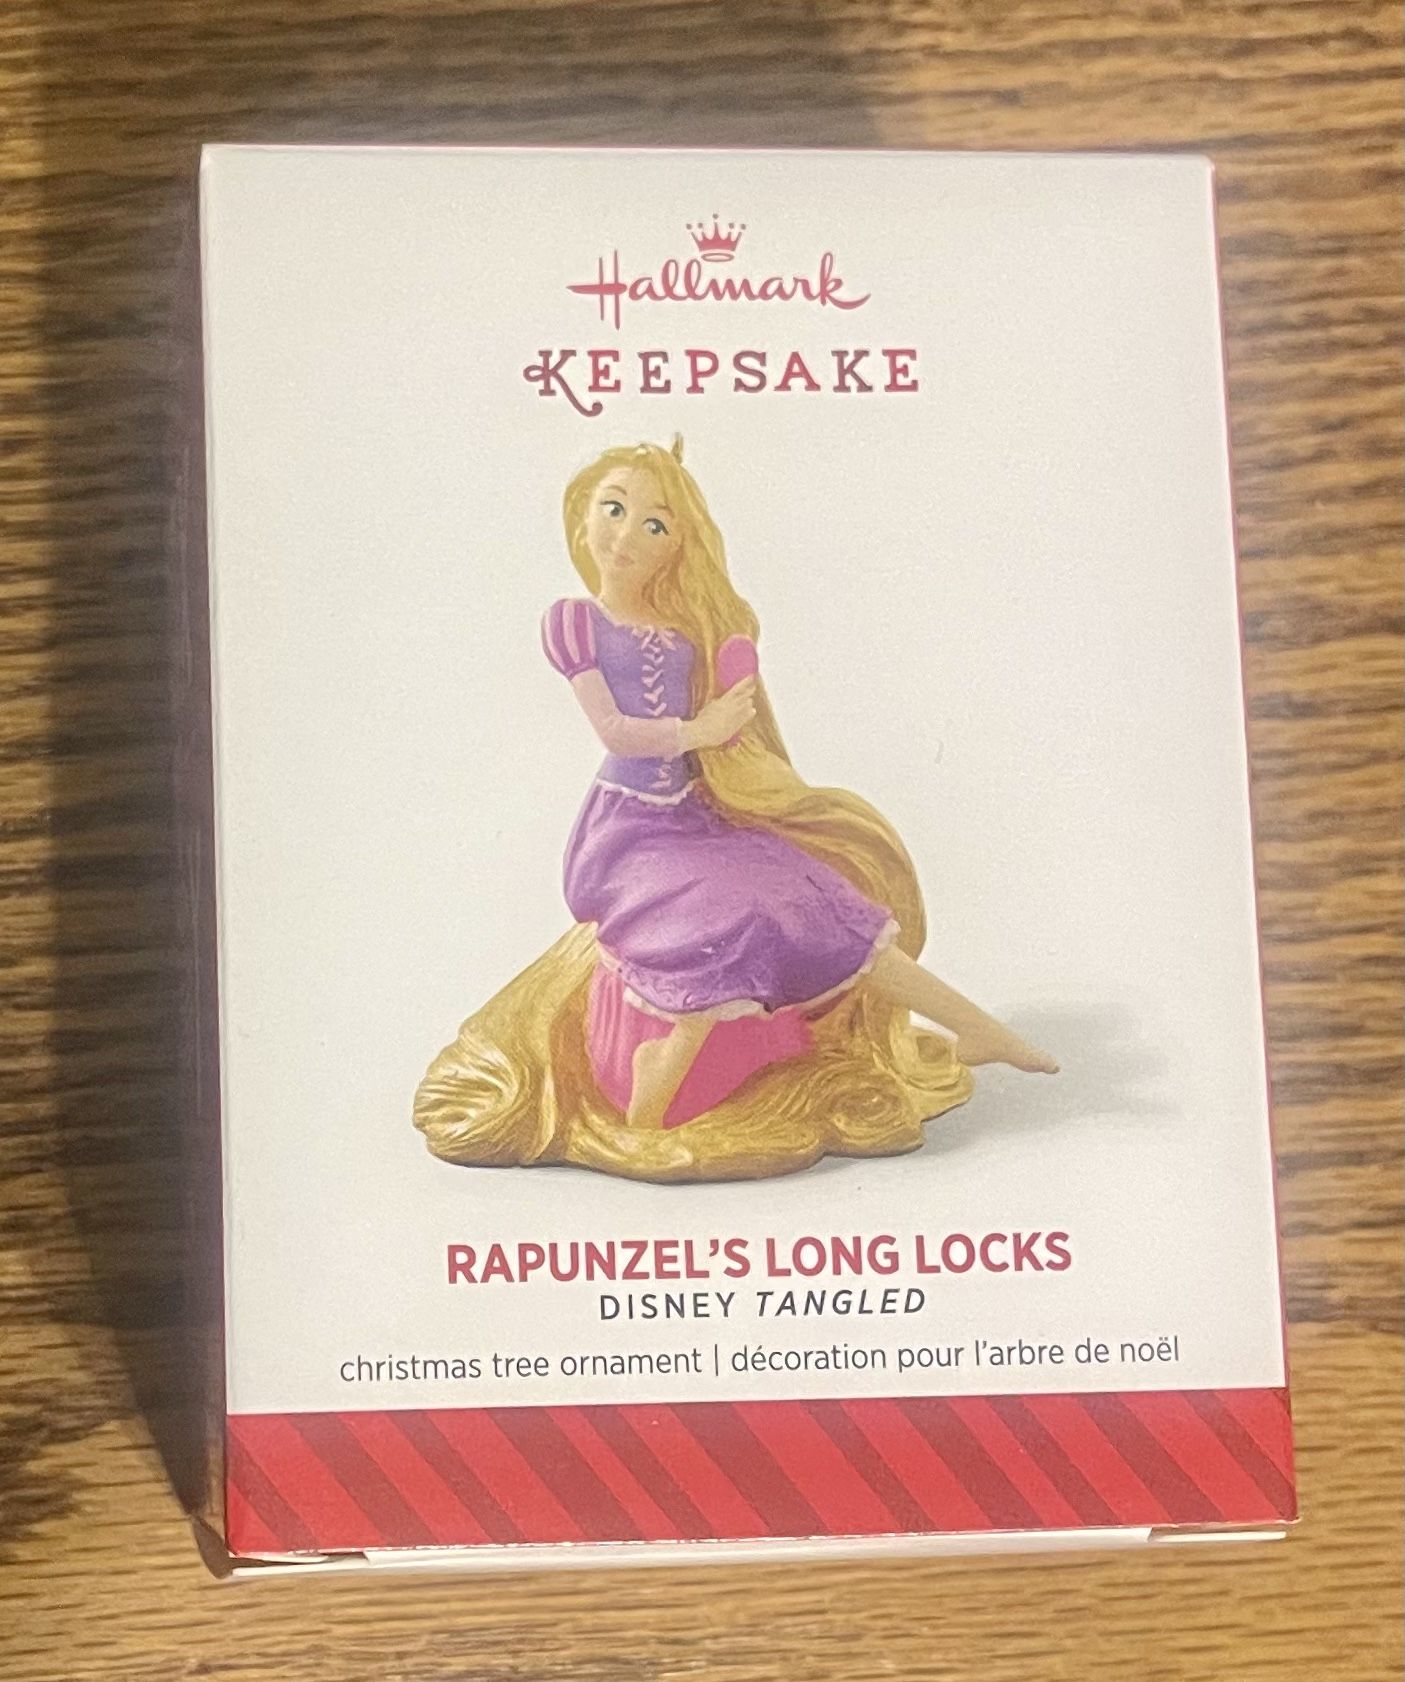 Hallmark Keepsake Rapunzel's Long Locks Ornament Disney Tangled Christmas 2014 